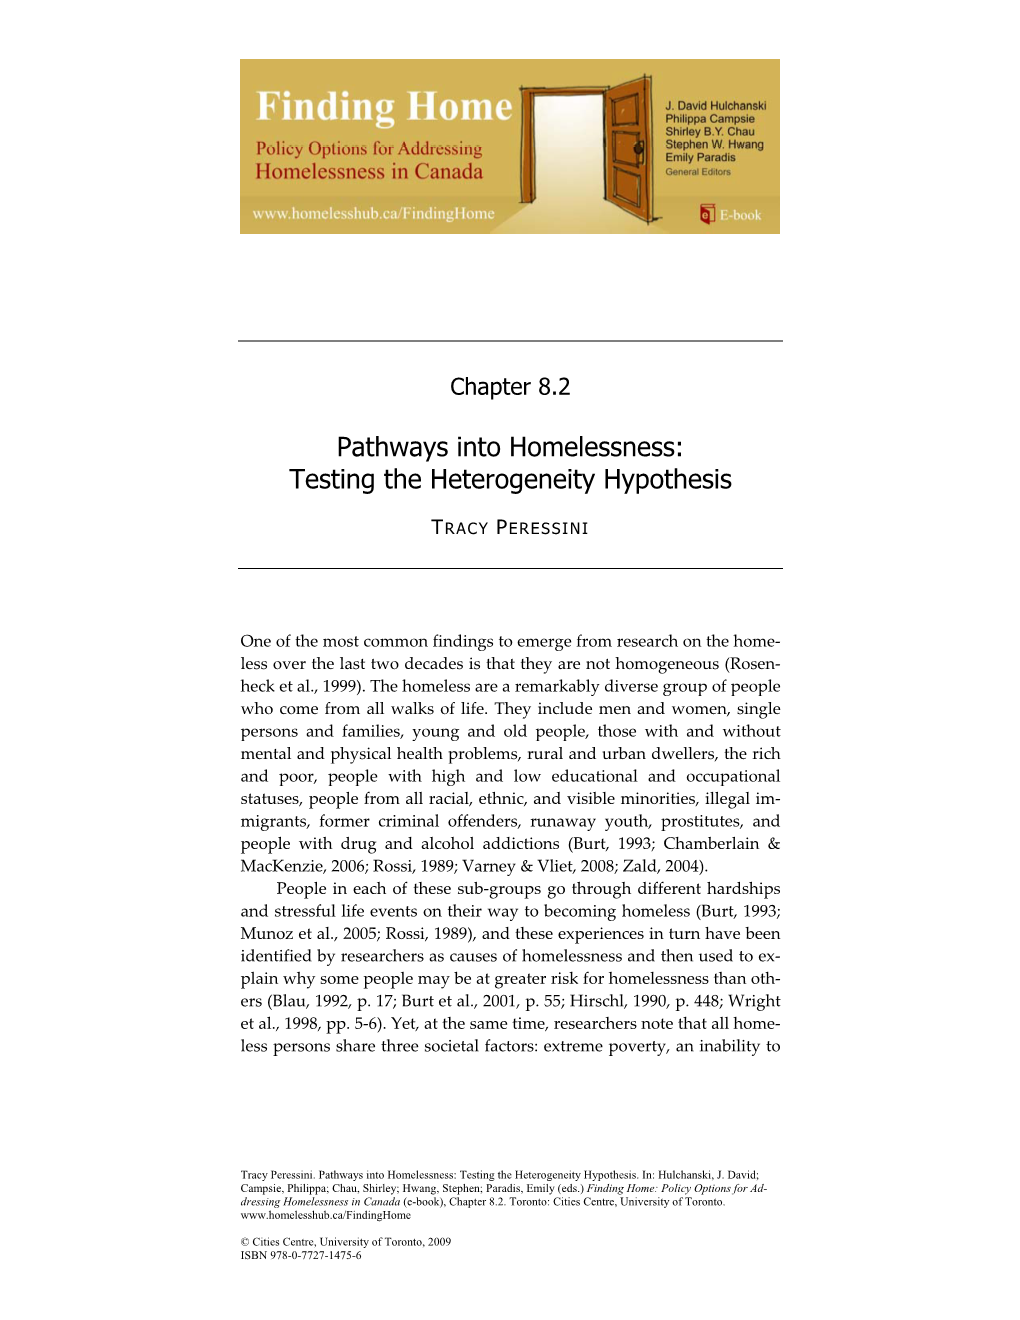 Pathways Into Homelessness: Testing the Heterogeneity Hypothesis